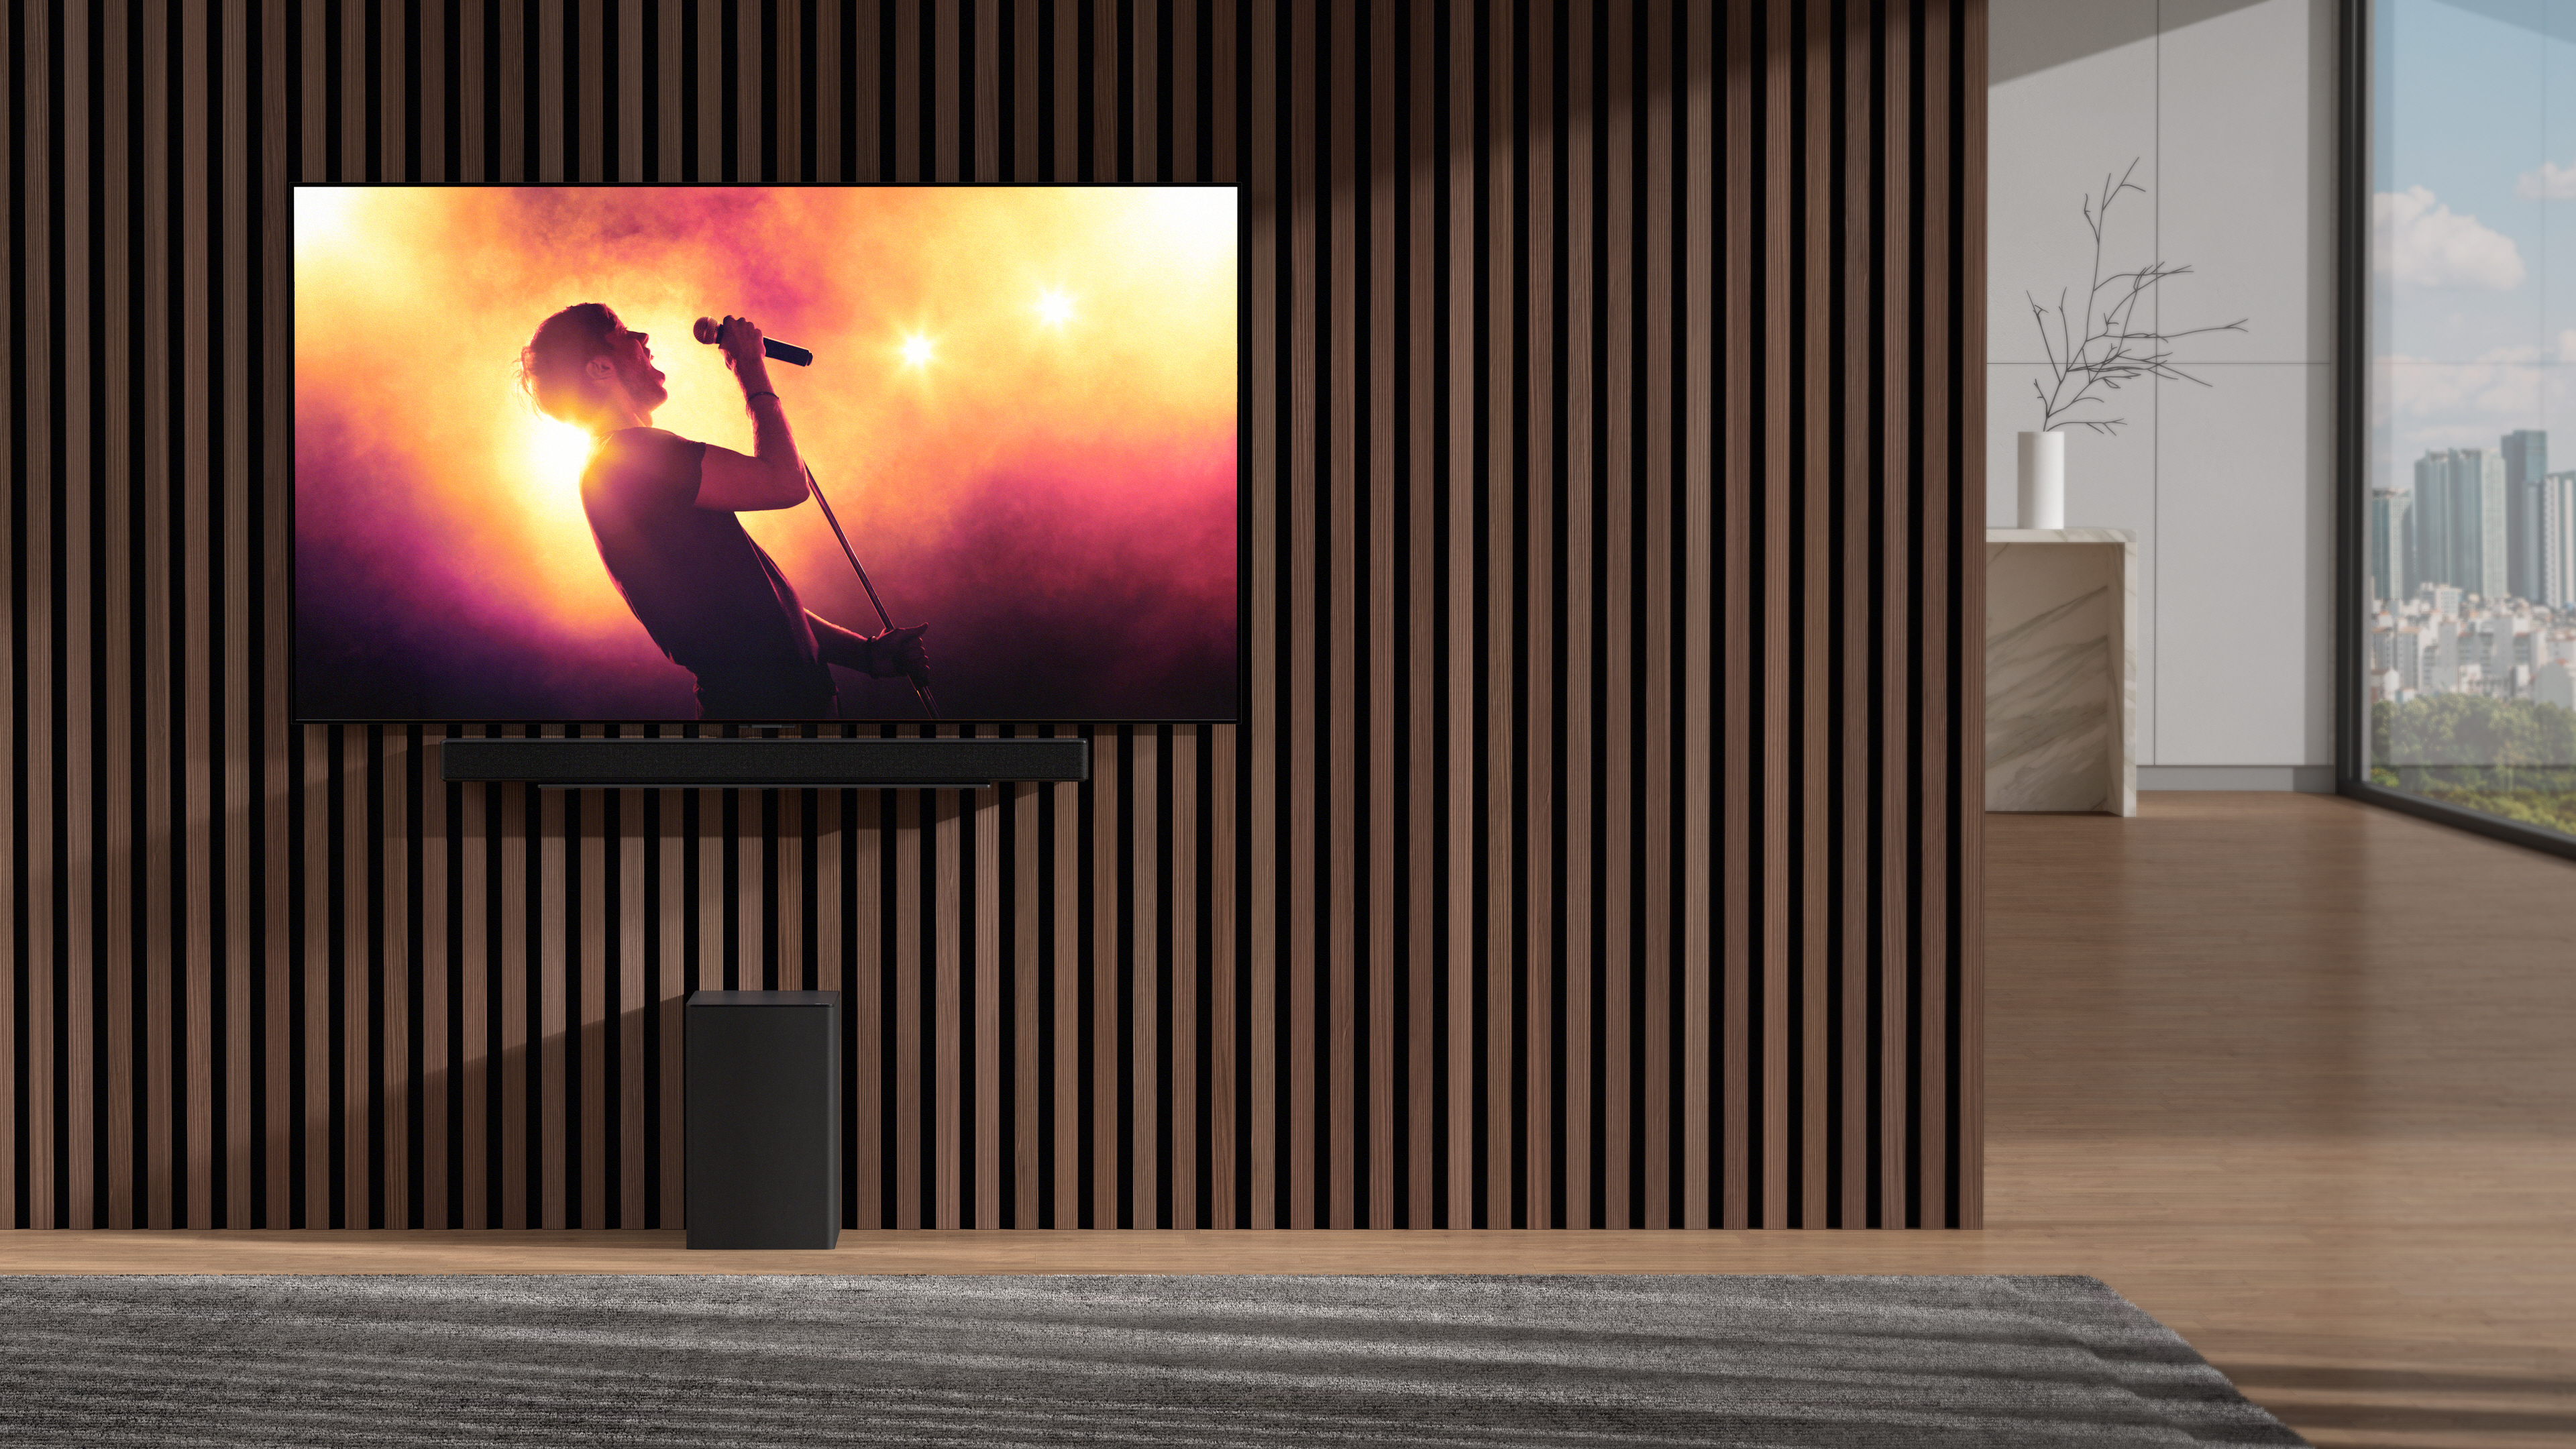 LG SC9 soundbar under TV against wood paneled wall